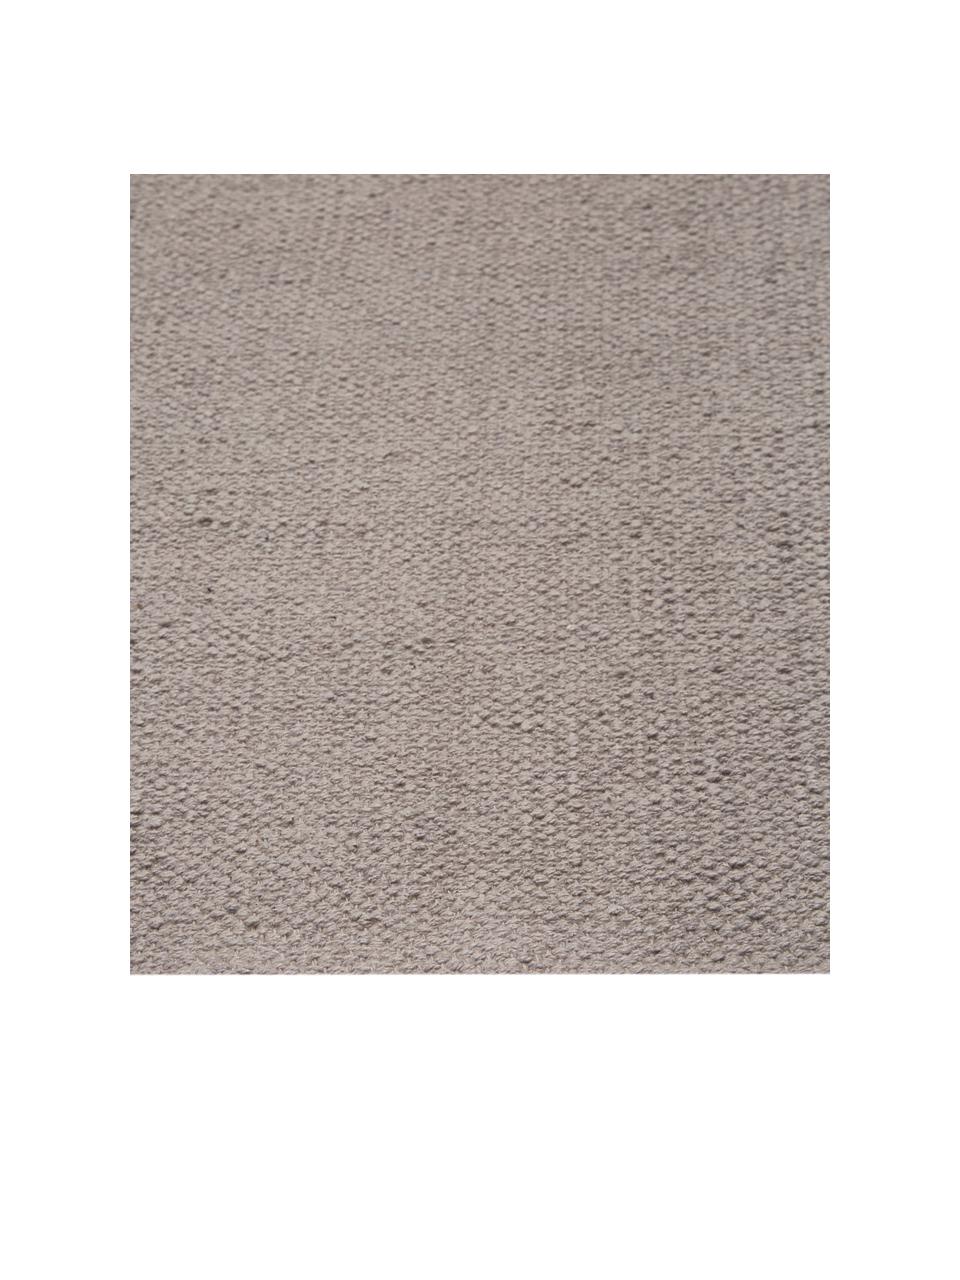 Dünner Baumwollteppich Agneta in Grau, handgewebt, 100% Baumwolle, Grau, B 120 x L 180 cm (Grösse S)